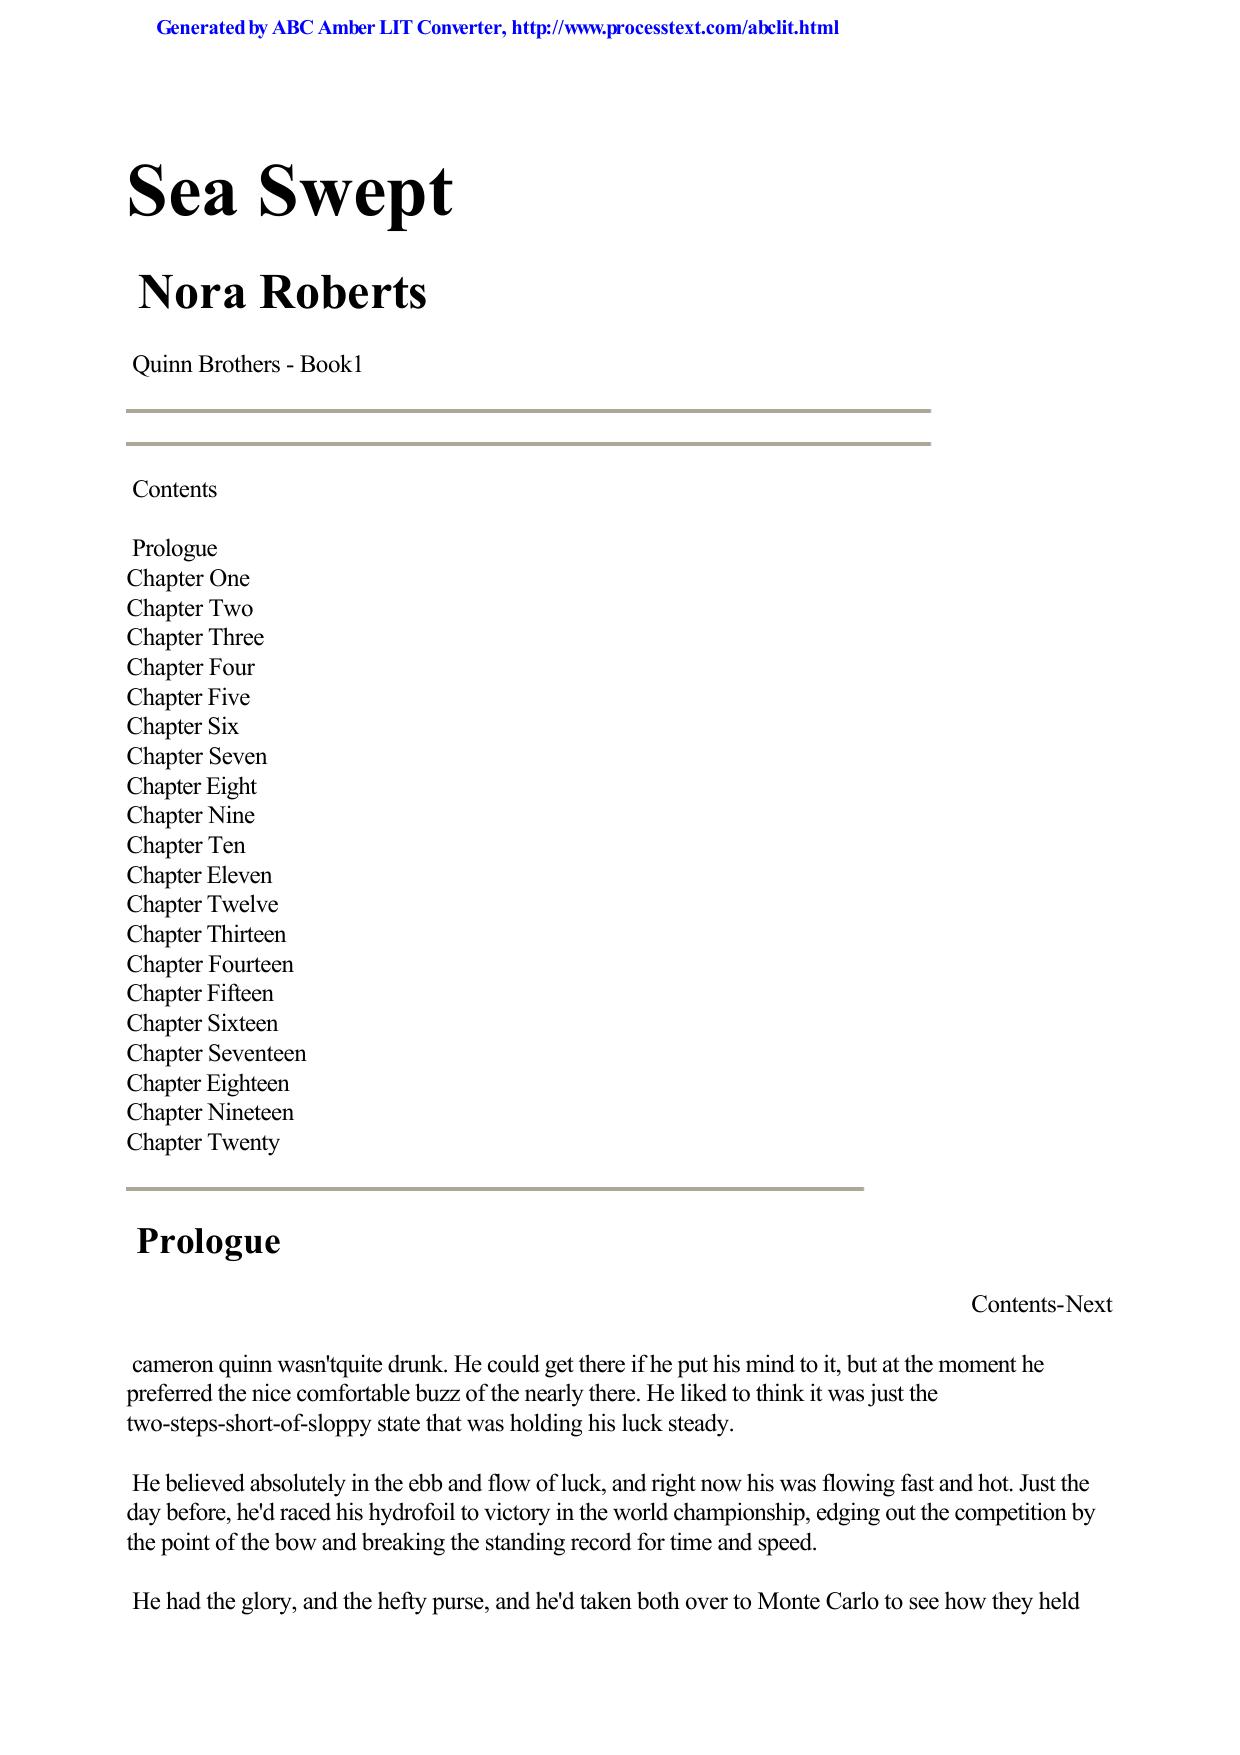 Nora Roberts - Quinn Brothers 01